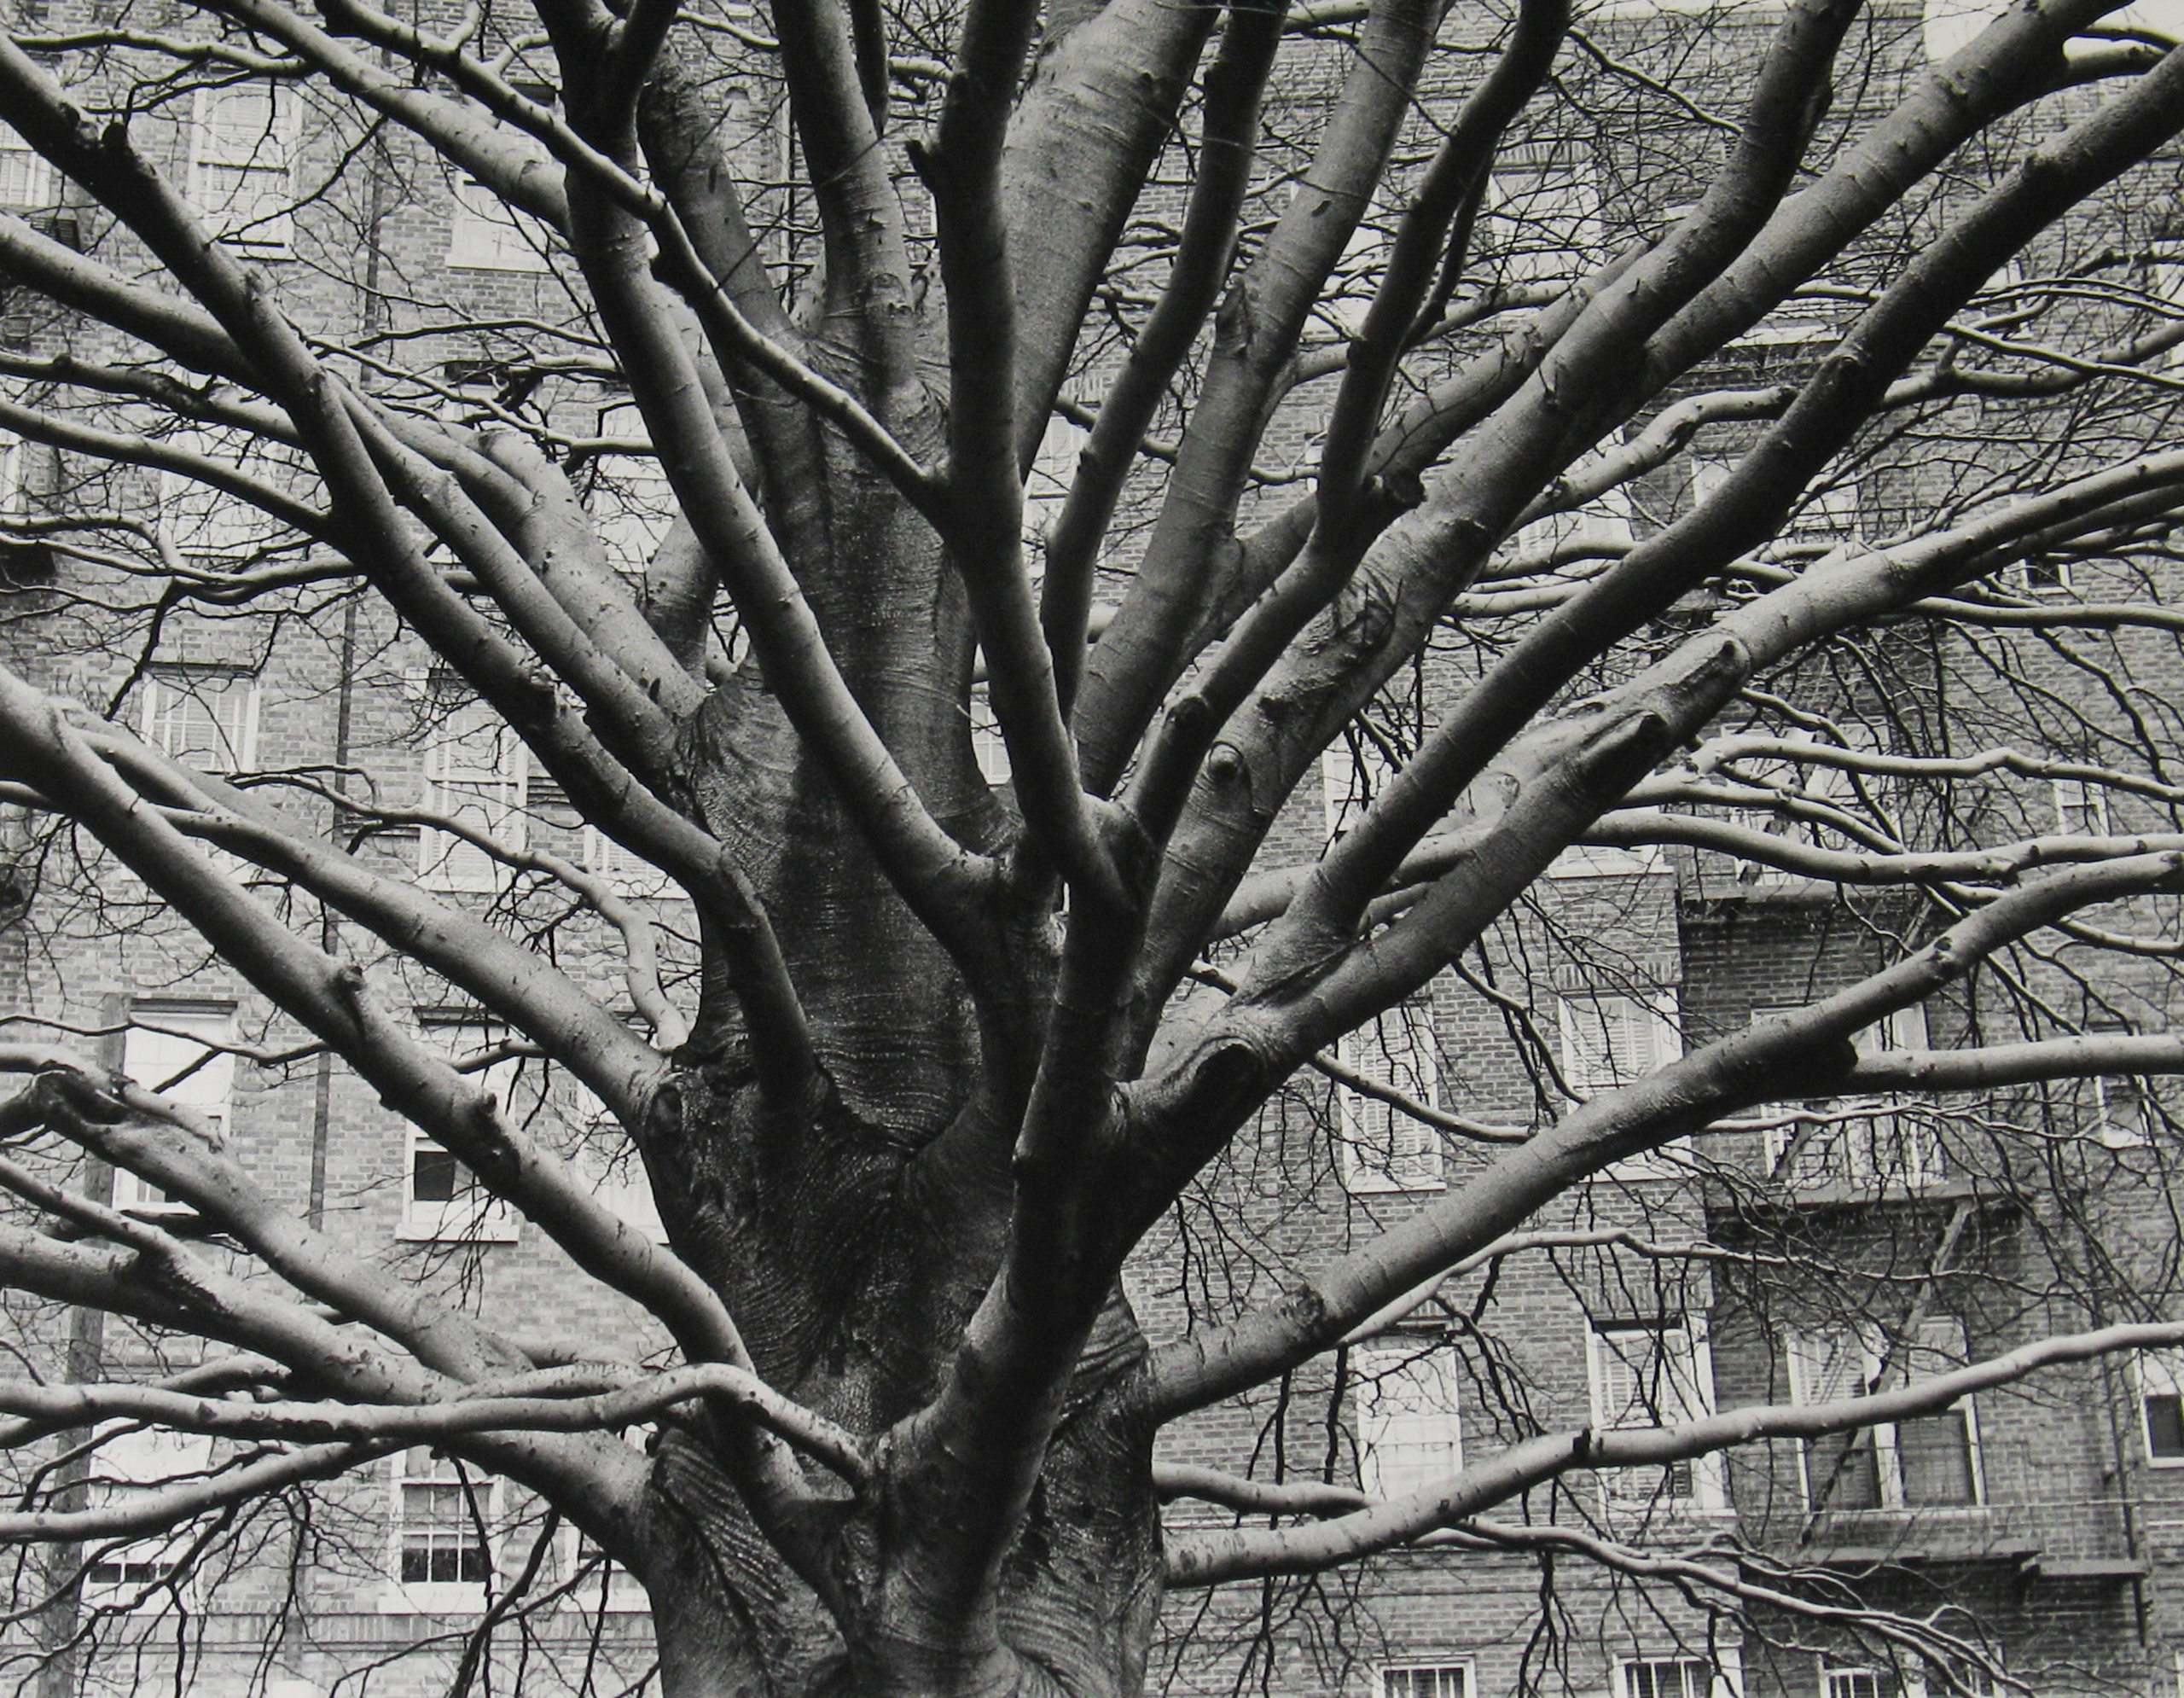 Tree and House, Brooklyn, New York, 1947